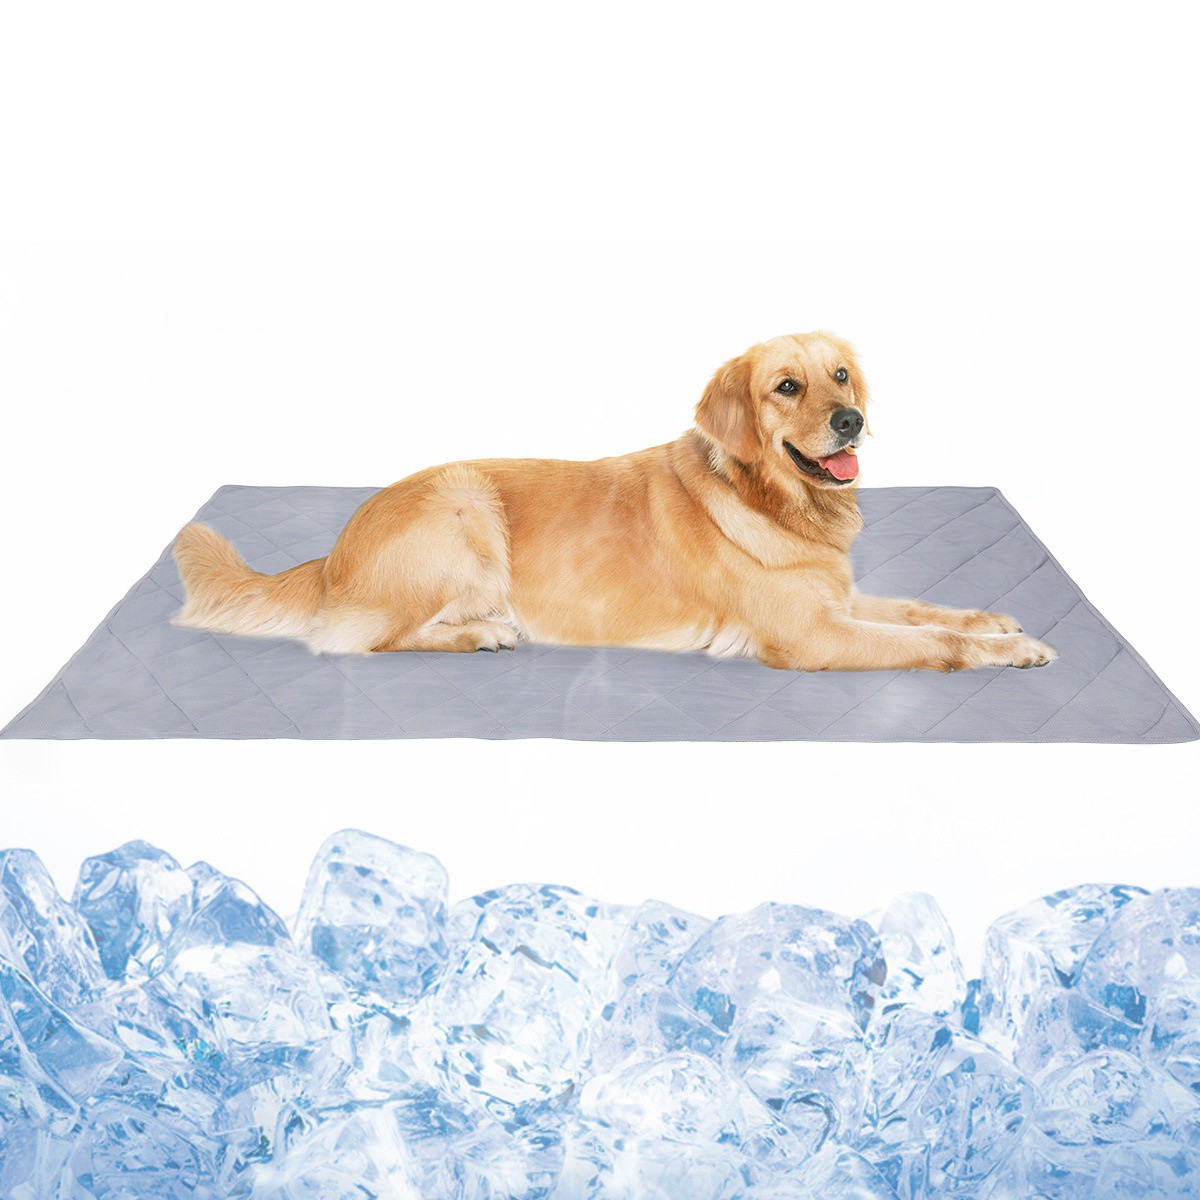 reversible pet cooling mat